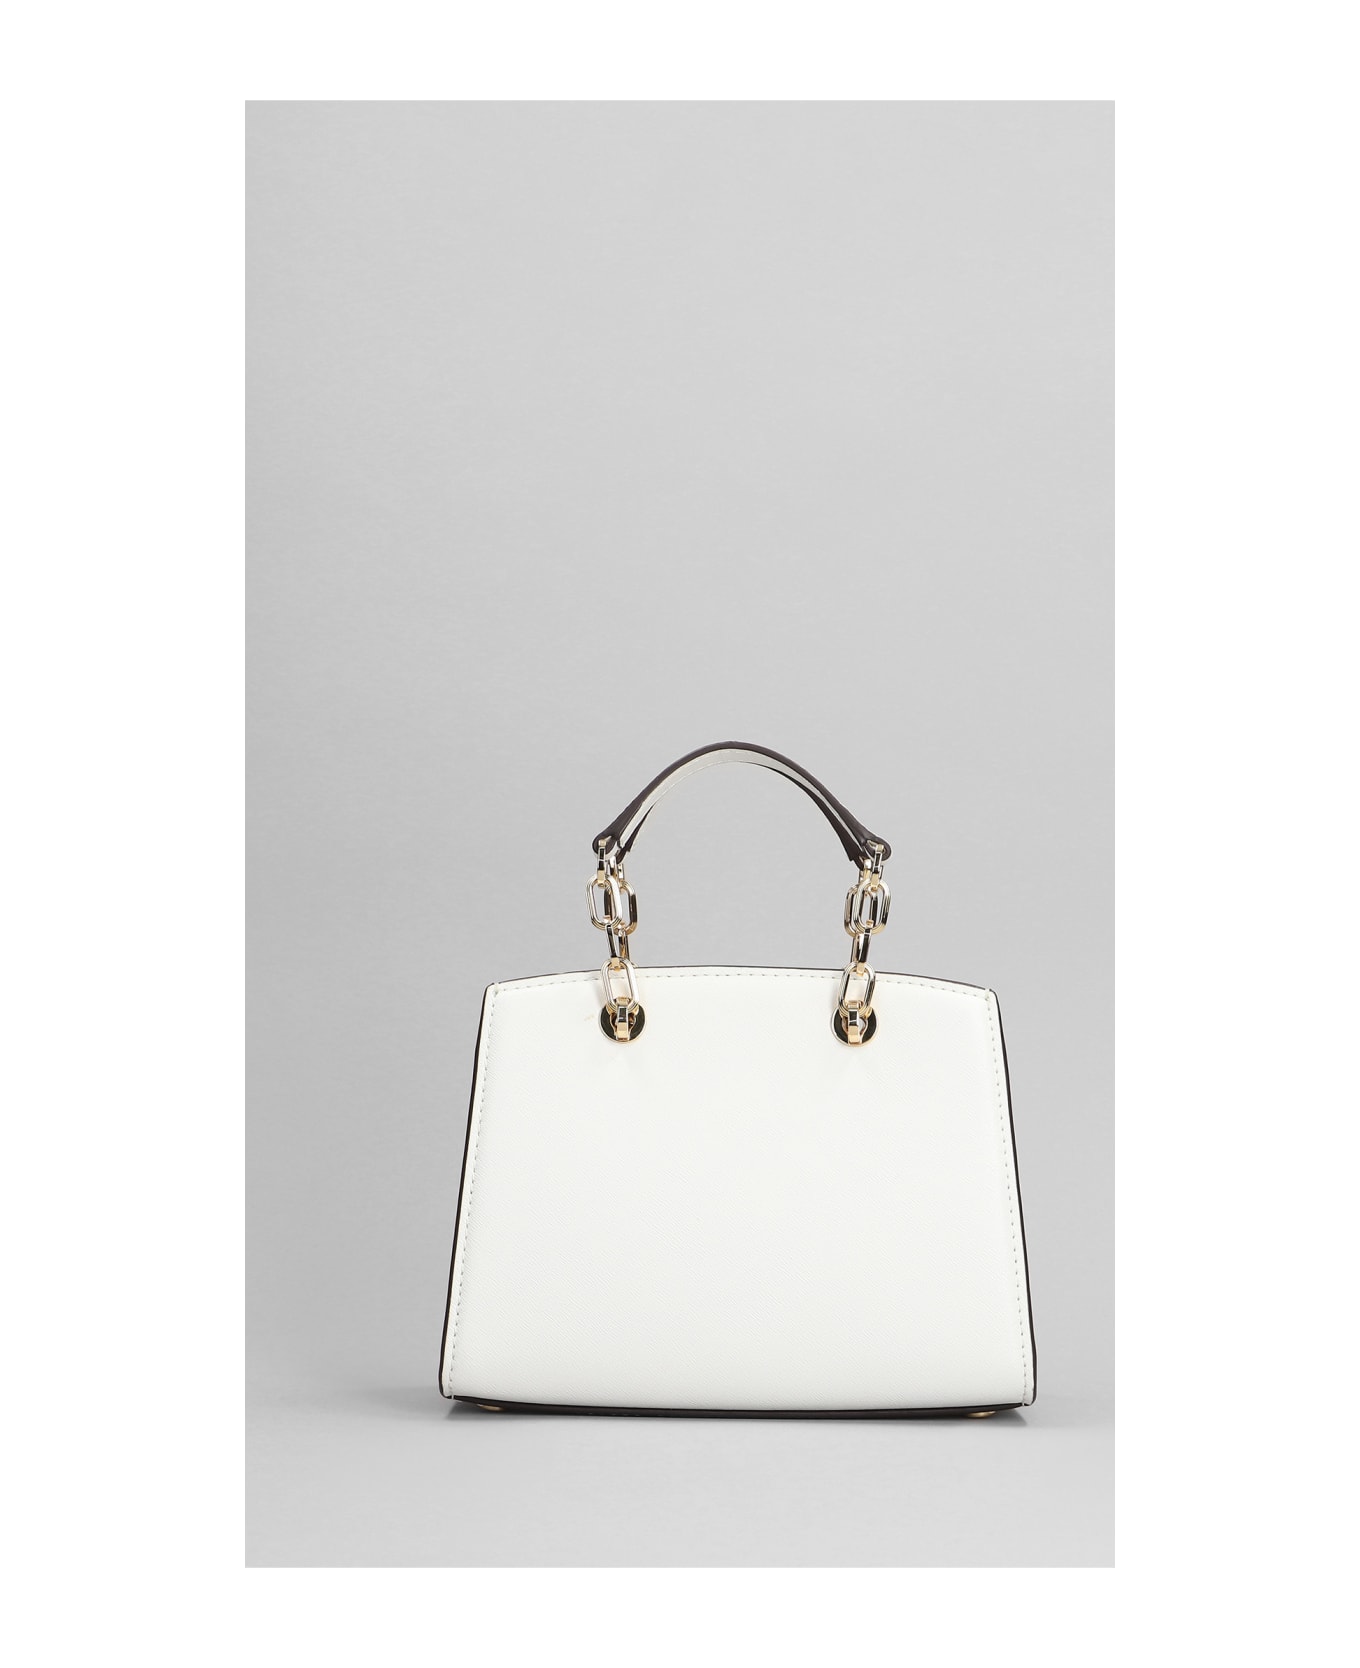 Michael Kors Cynthia Hand Bag In White Leather - white